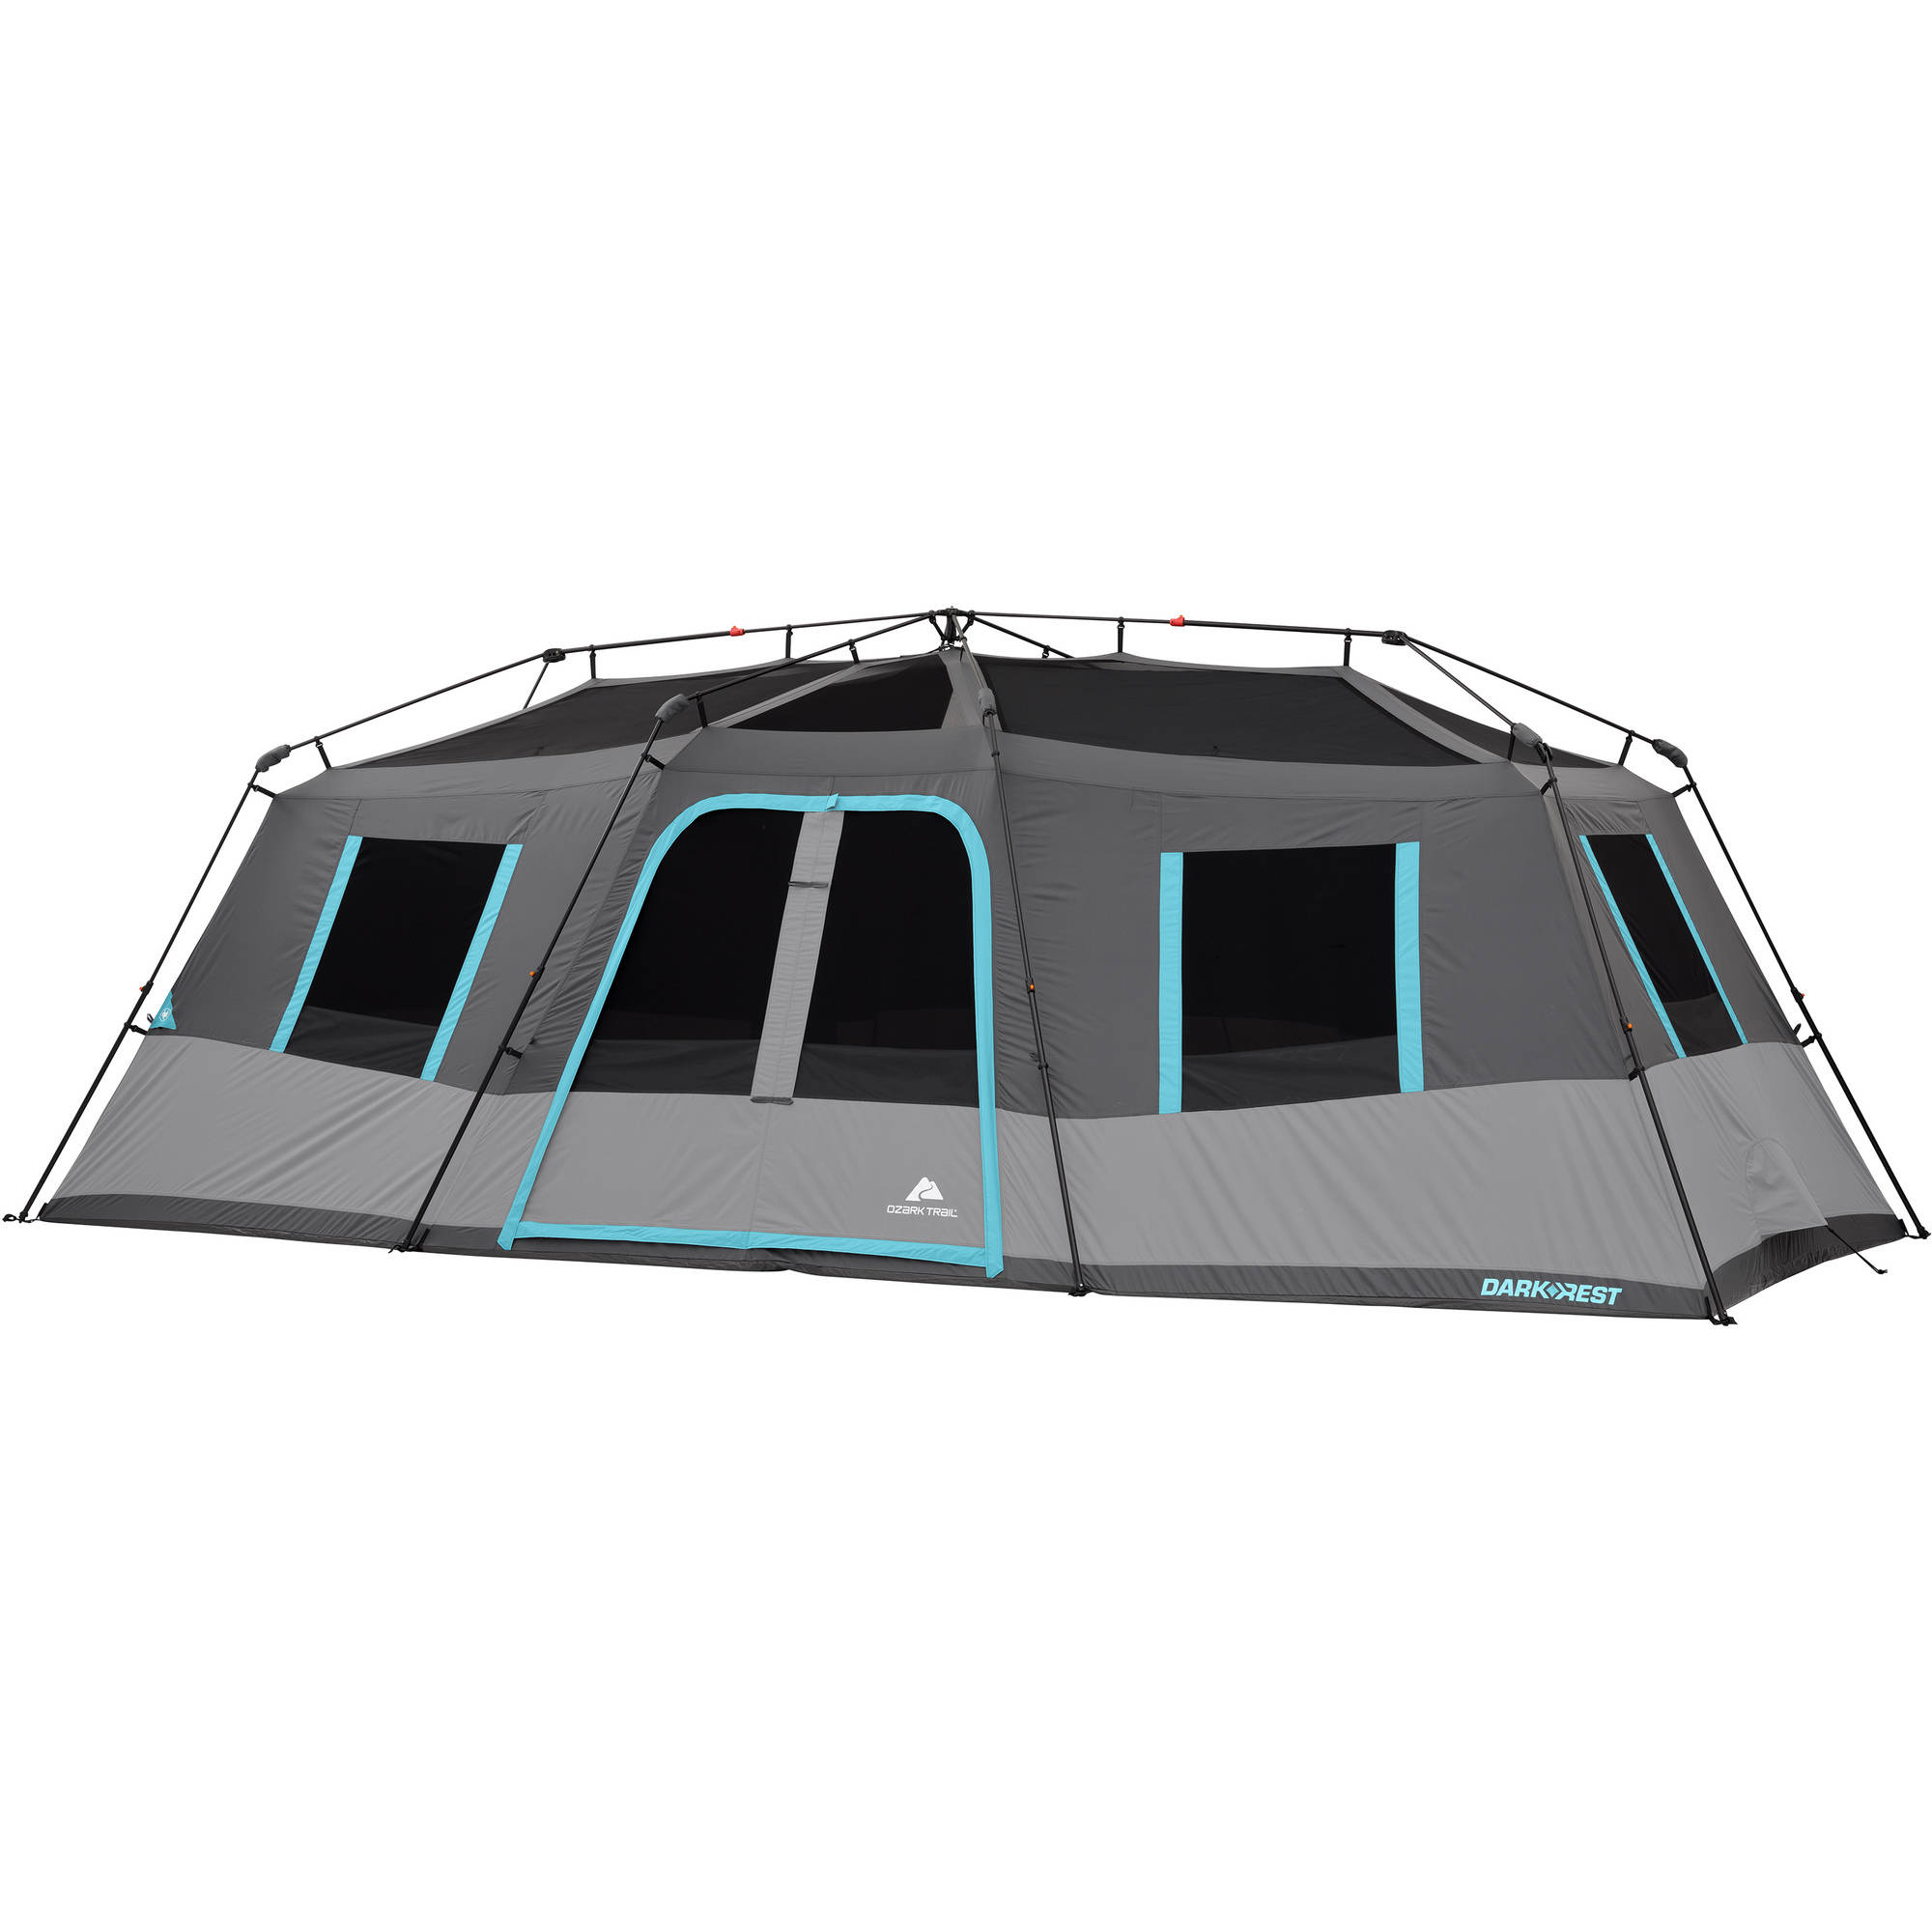 Ozark Trail 20' x 10' Dark Rest Instant Cabin Tent, Sleeps 12, 45.72 lbs - image 2 of 9